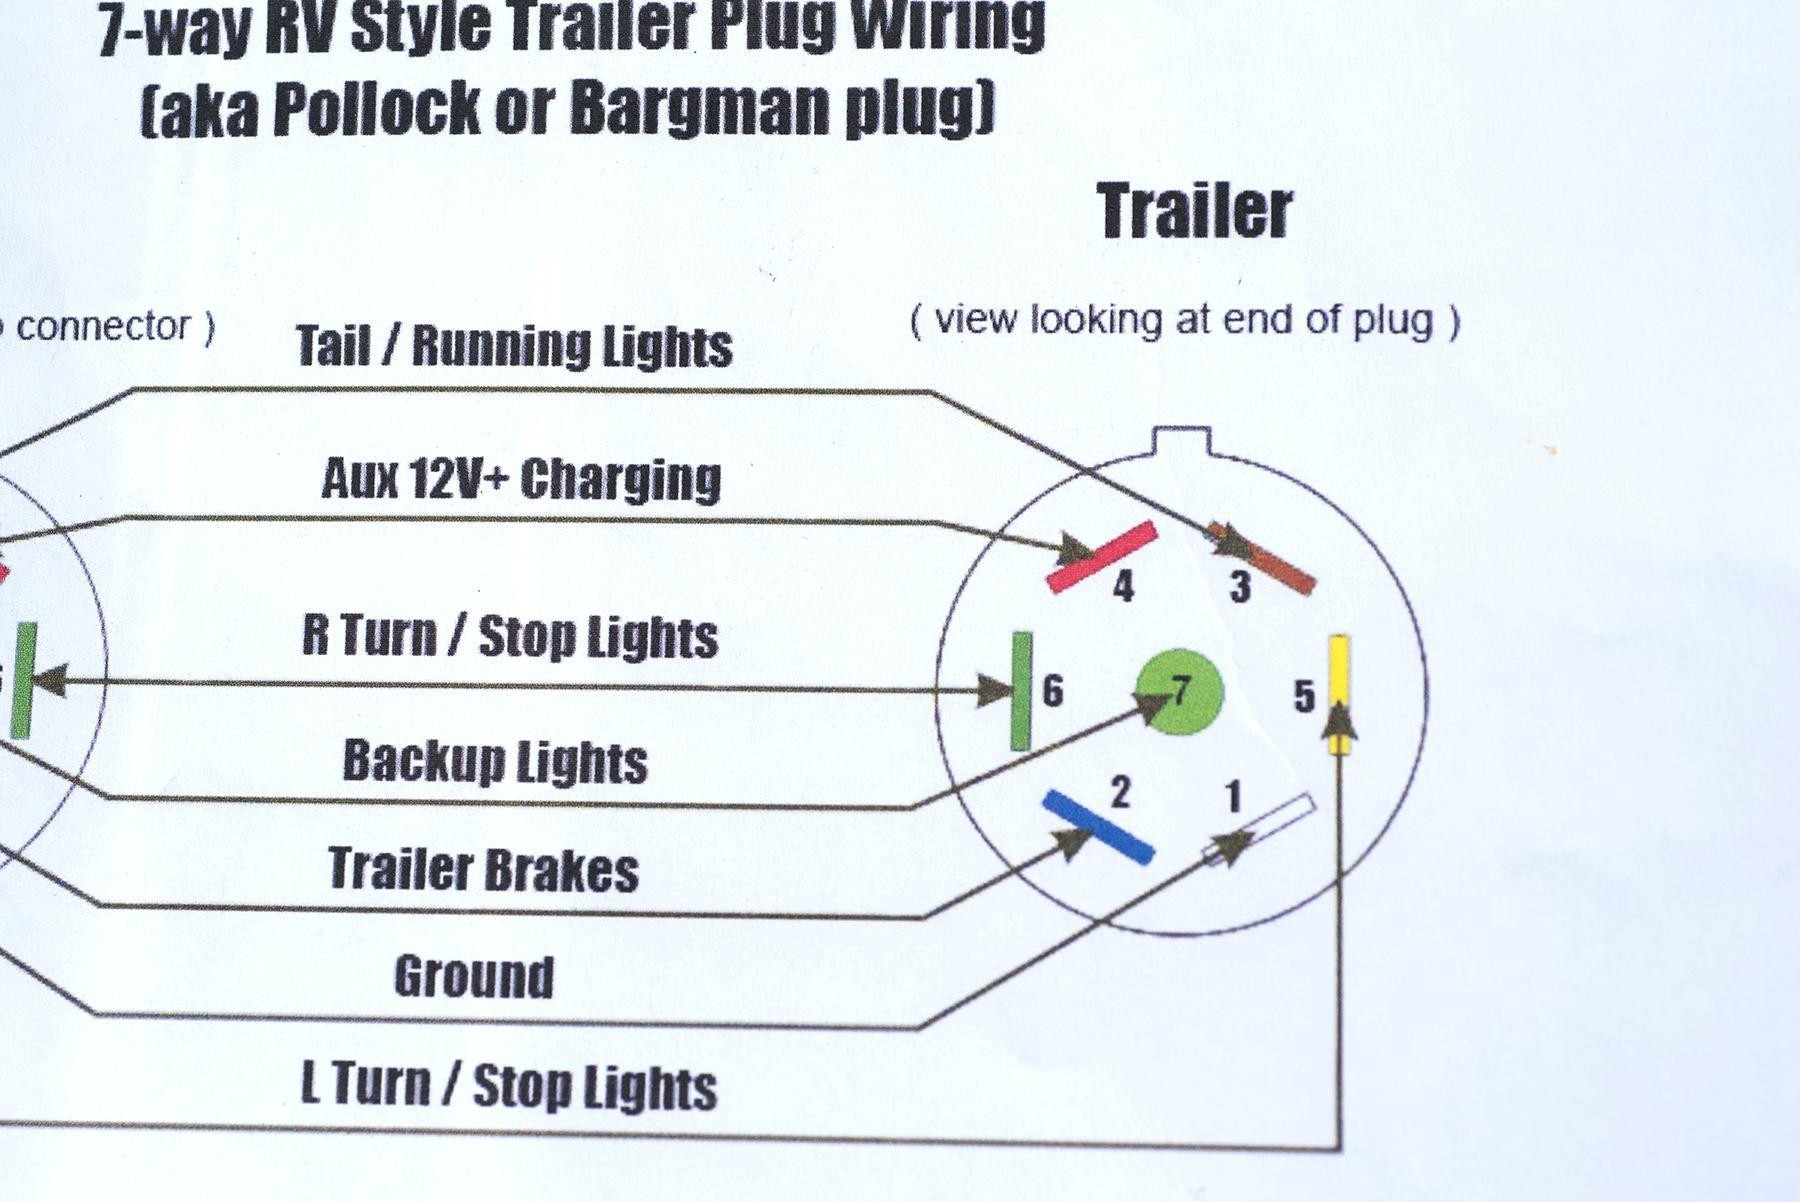 Wiring Diagram For Trailer Save 7 Prong Trailer Plug Wiring Diagram